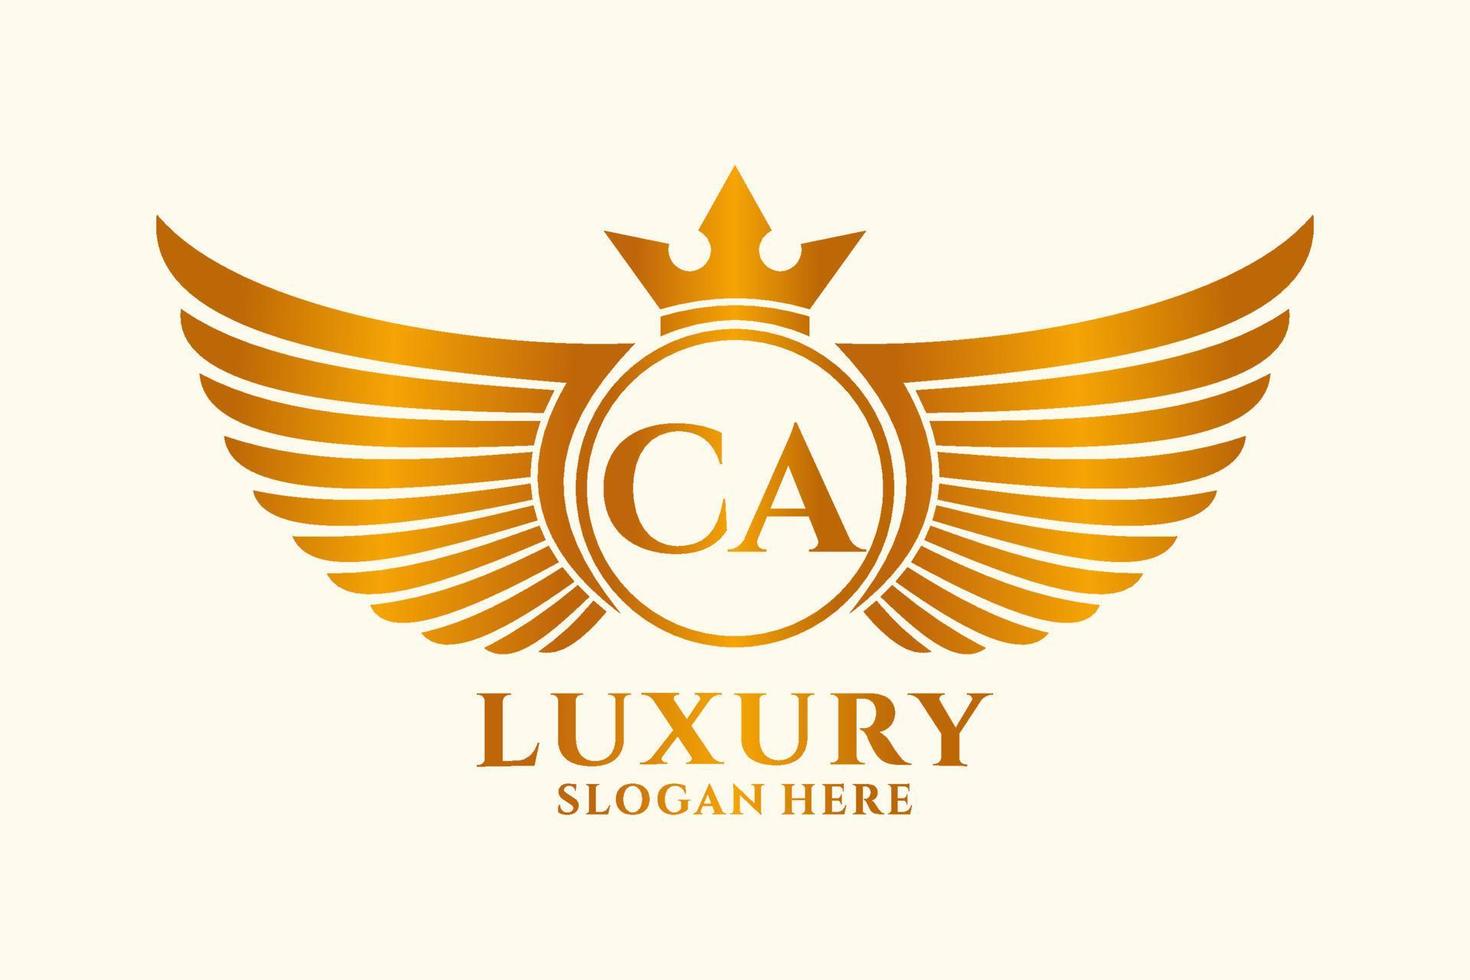 luxe Koninklijk vleugel brief ca kam goud kleur logo vector, zege logo, kam logo, vleugel logo, vector logo sjabloon.